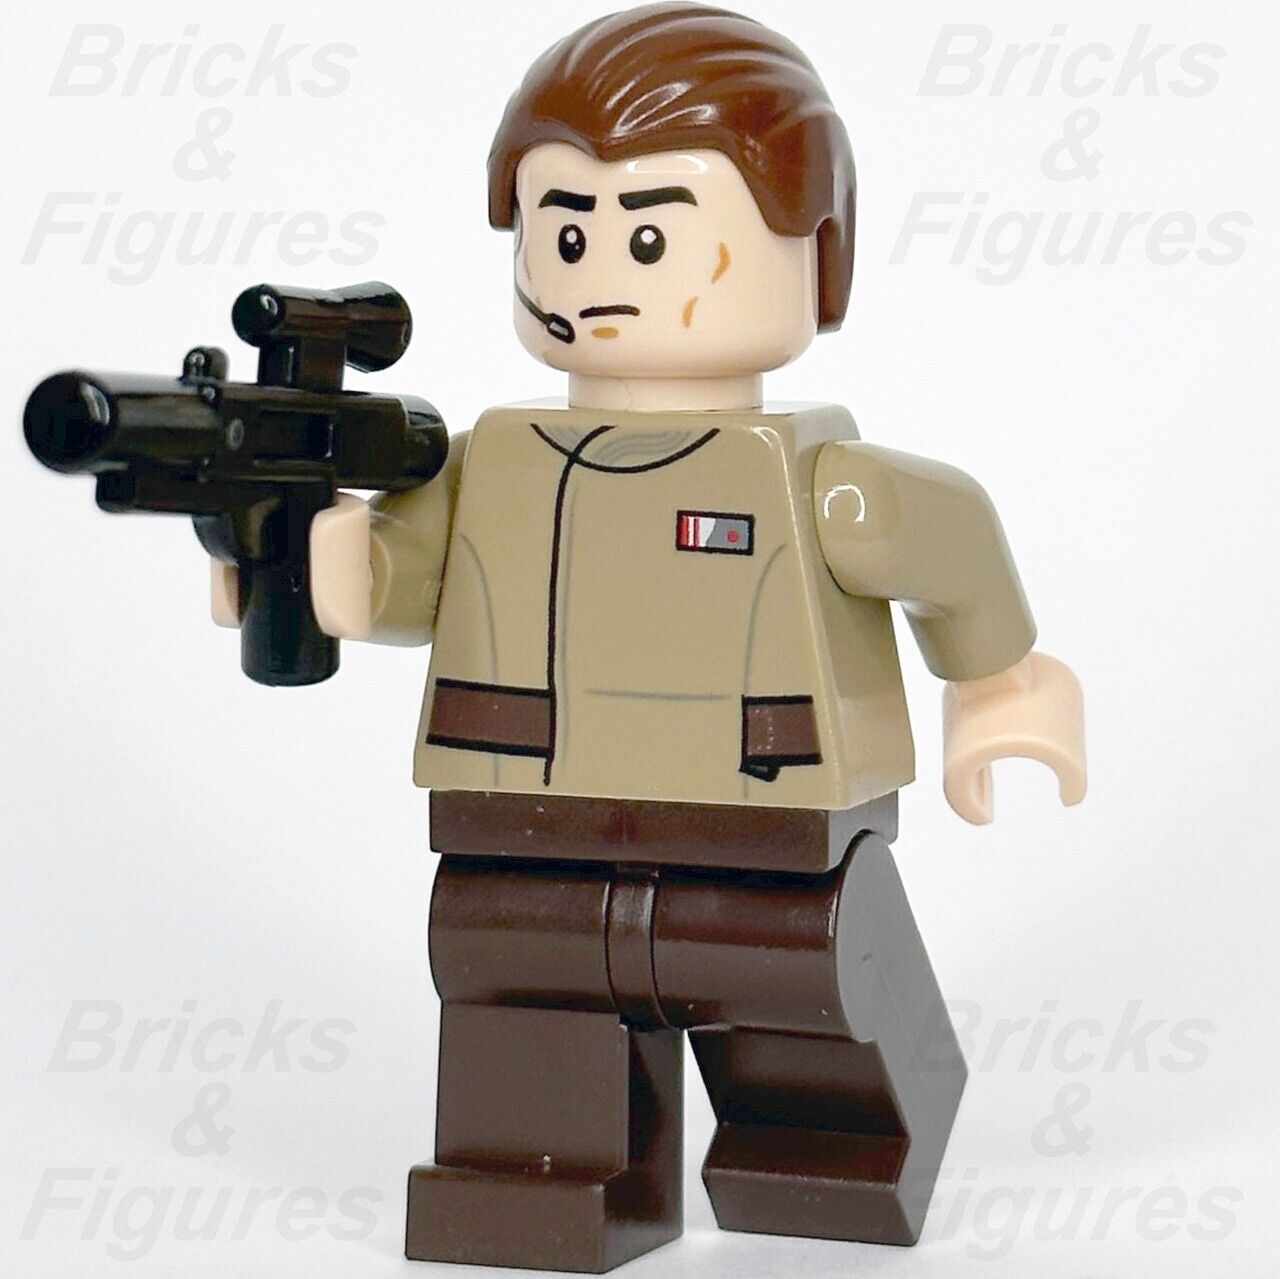 LEGO Star Wars Resistance Officer Minifigure Headset Print Pattern 75131 sw0699 - Bricks & Figures